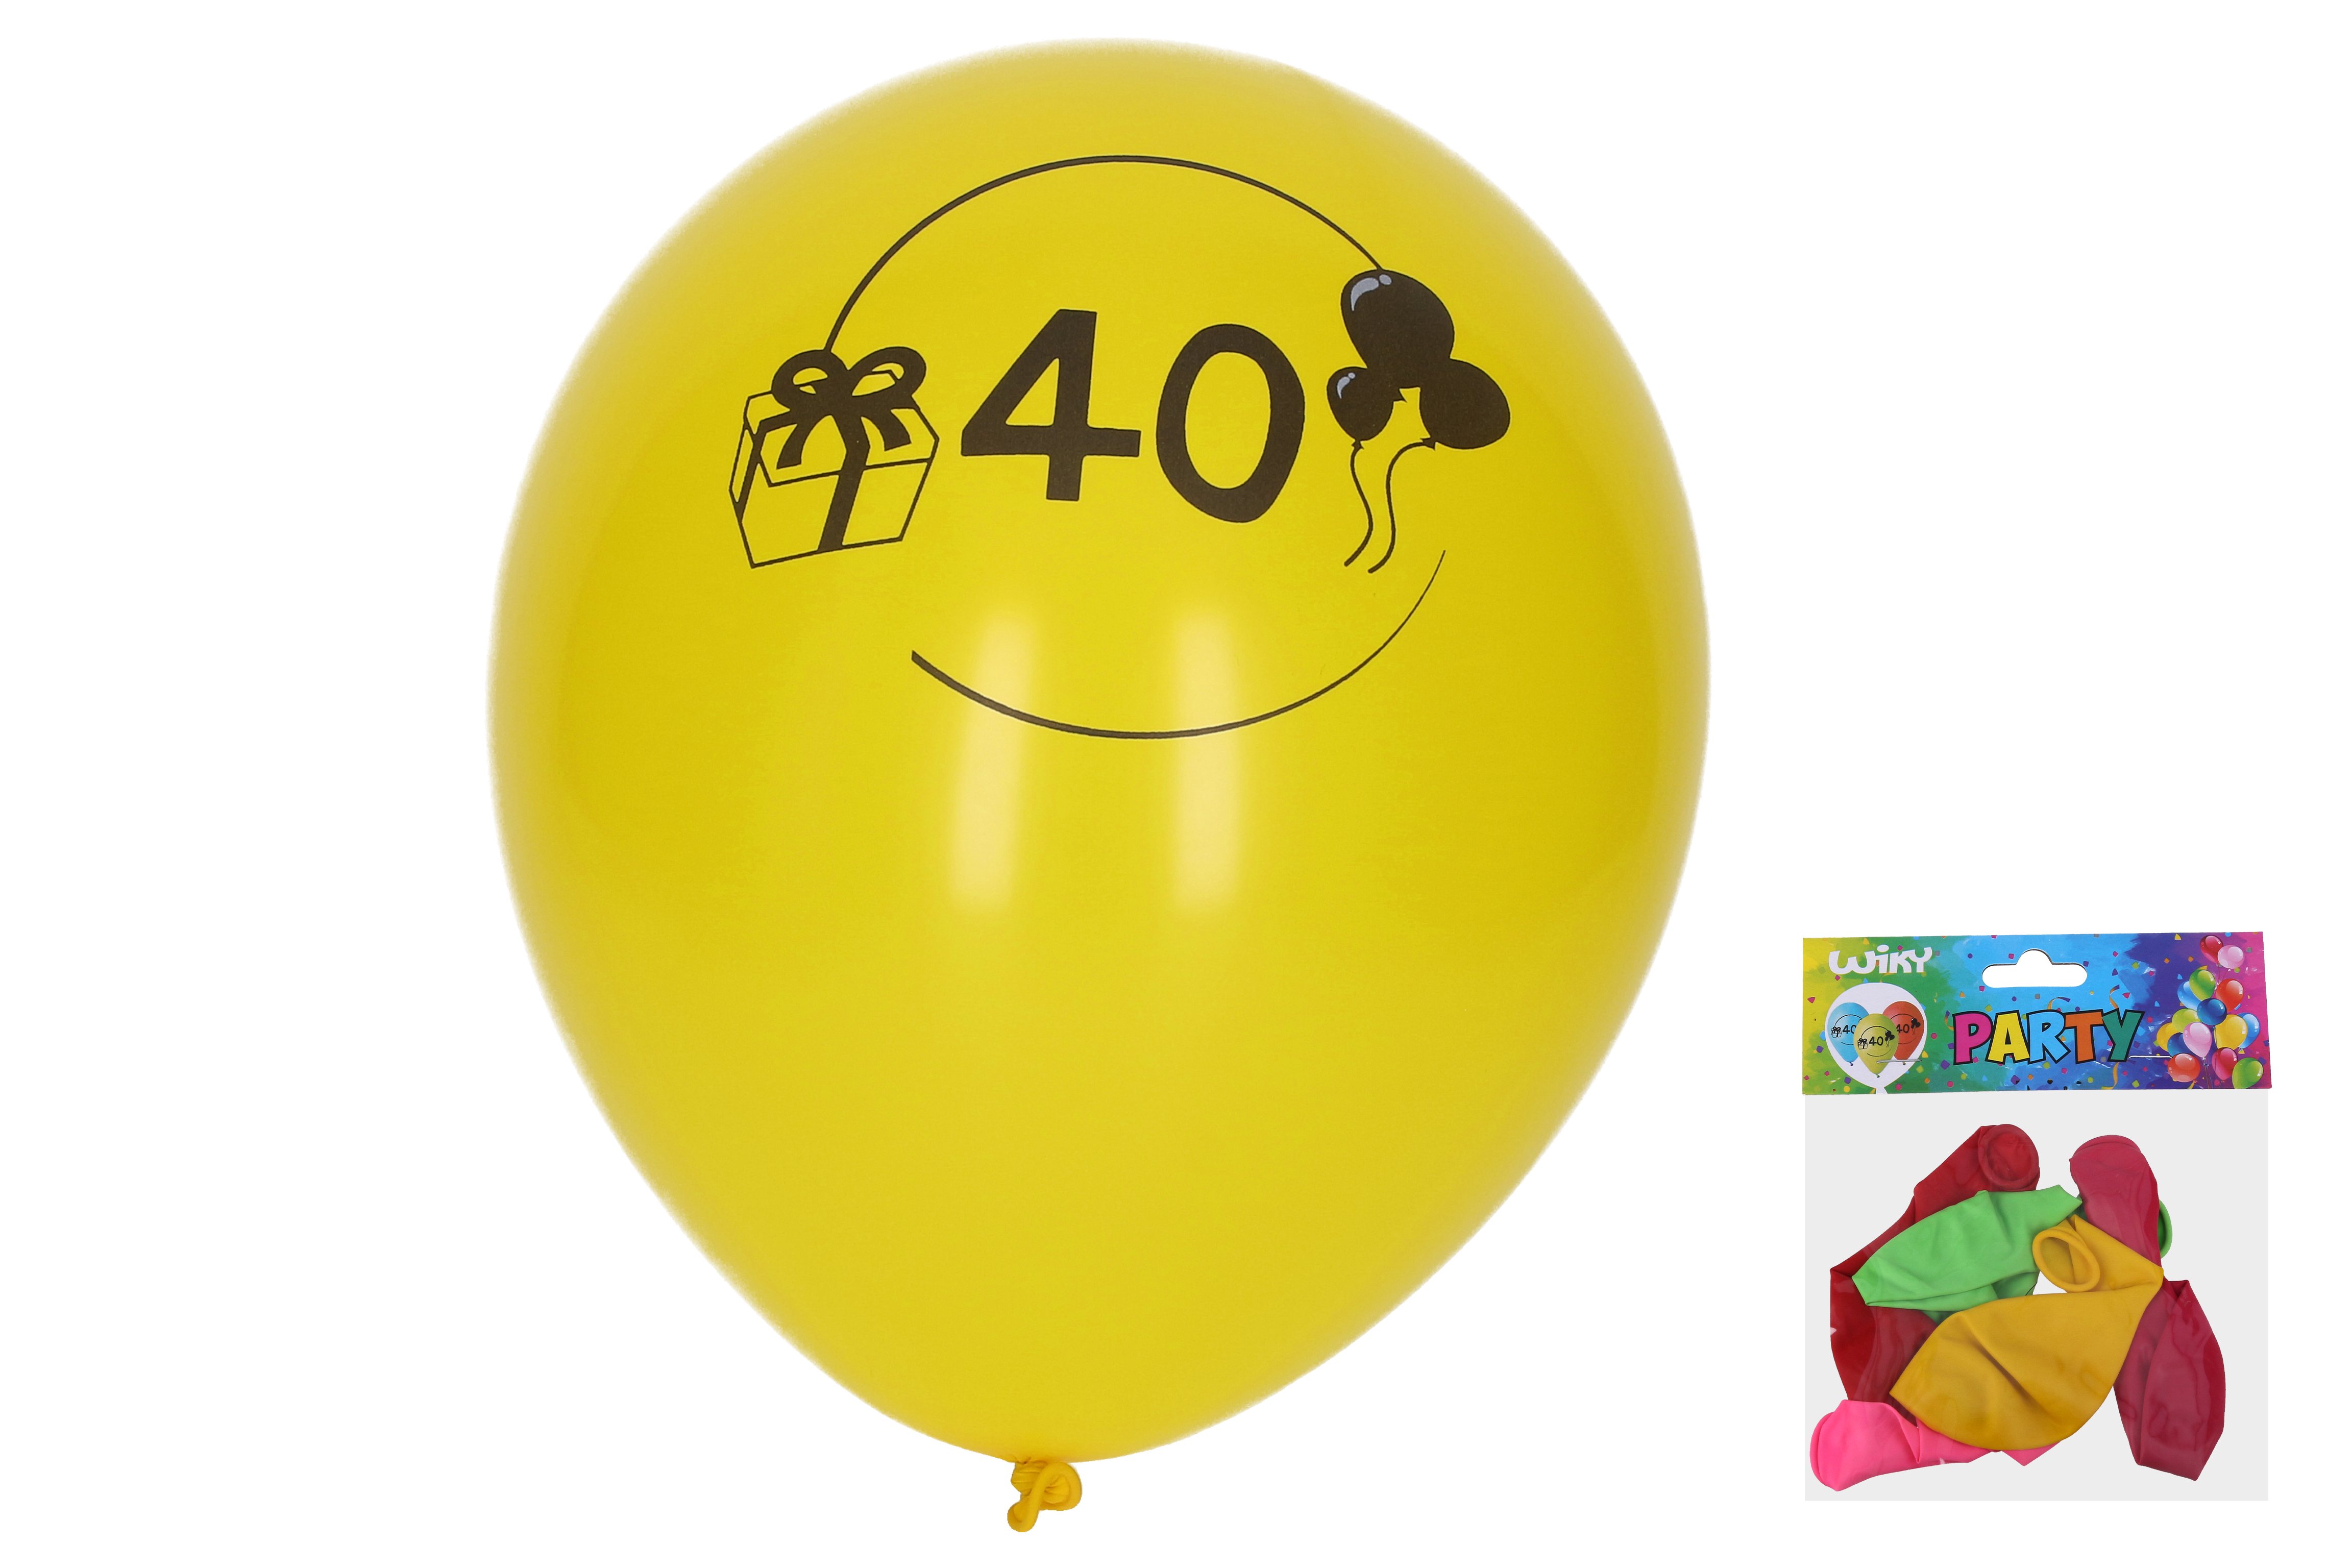 Balónek nafukovací 30 cm - sada 5ks, s číslem 40